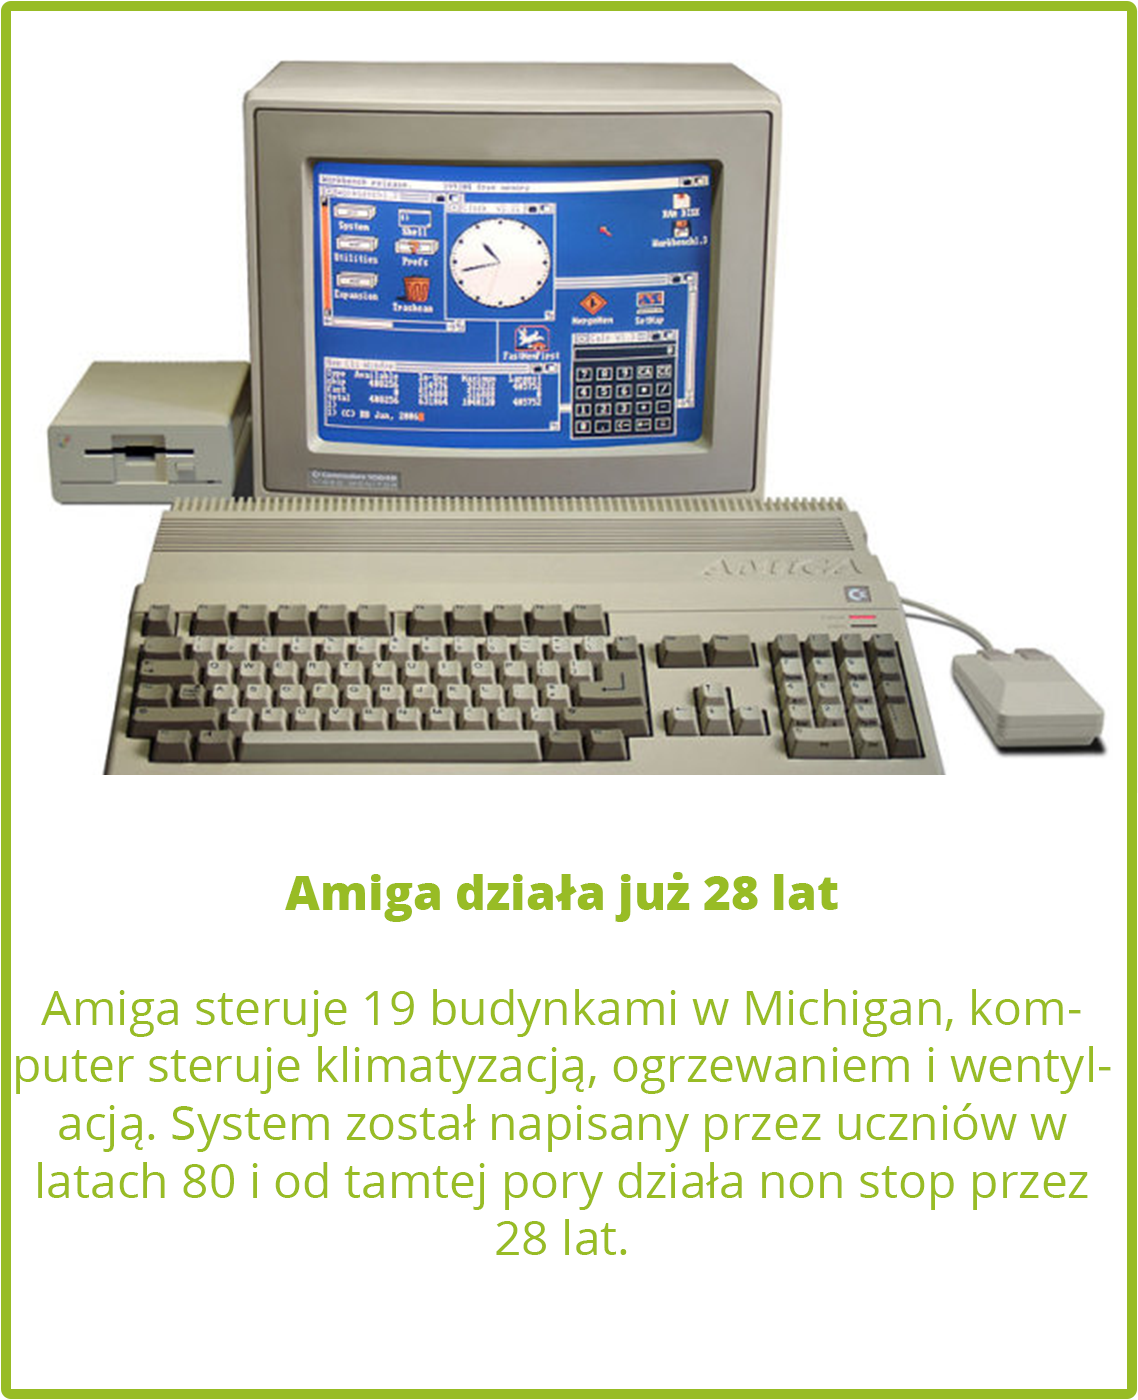 Amiga działa już 28 lat